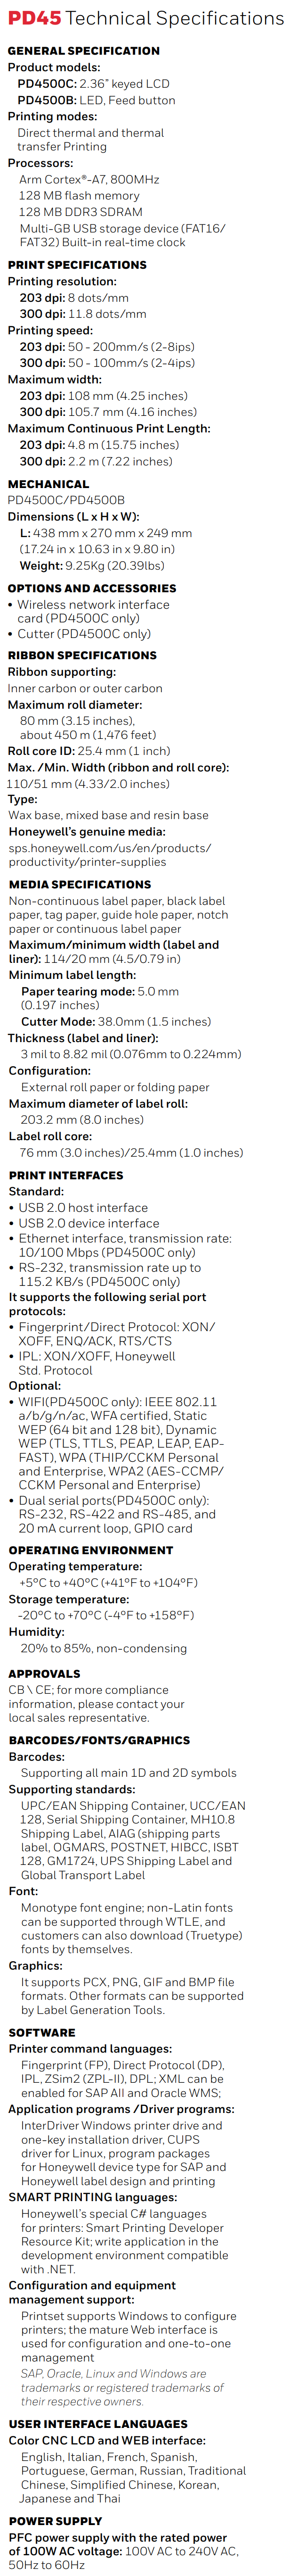 Honeywell PD45 Industrial Label Printer datasheet